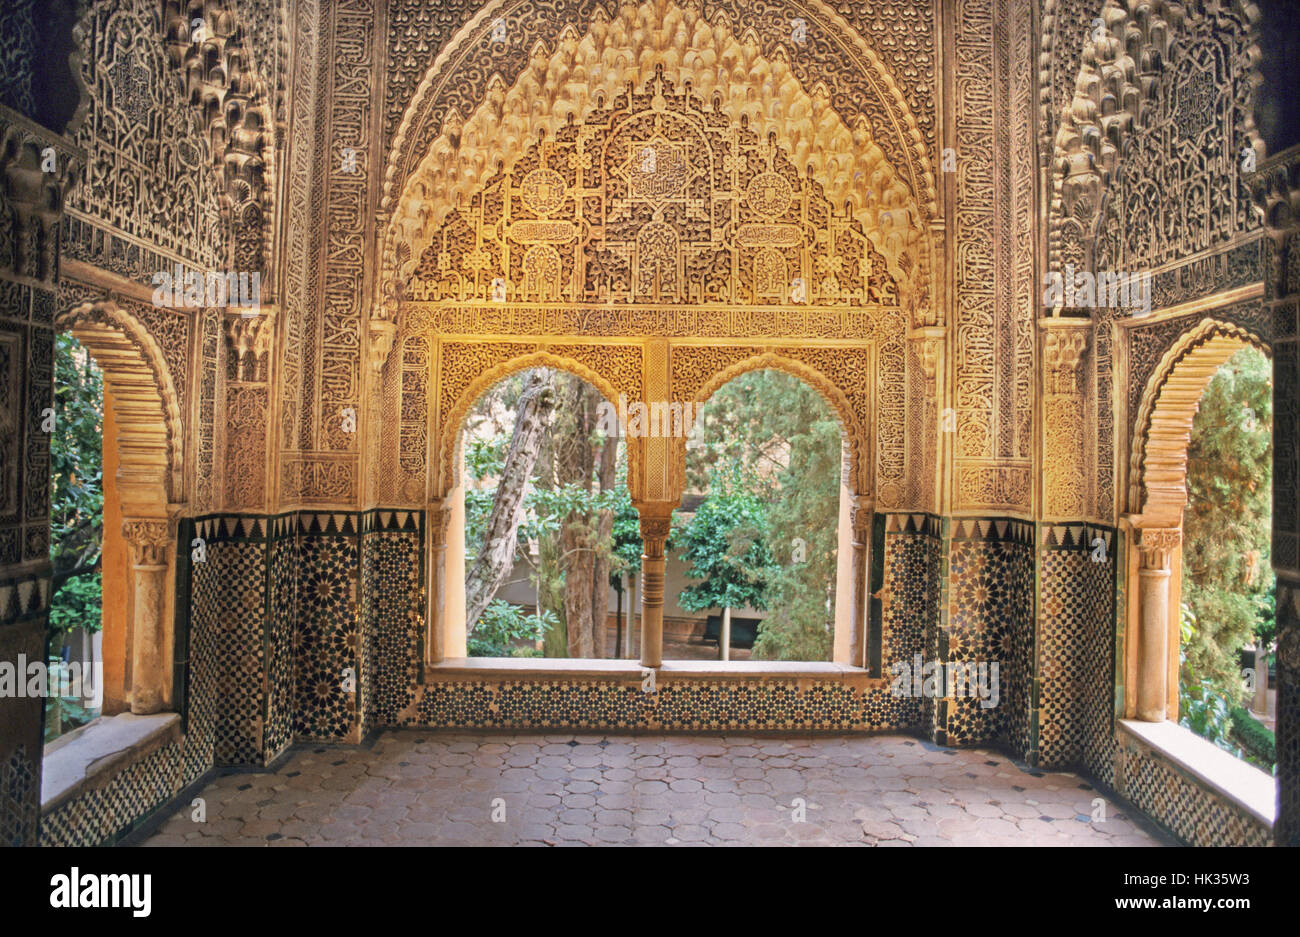 ✓ The Alhambra - Data, Photos & Plans - WikiArquitectura